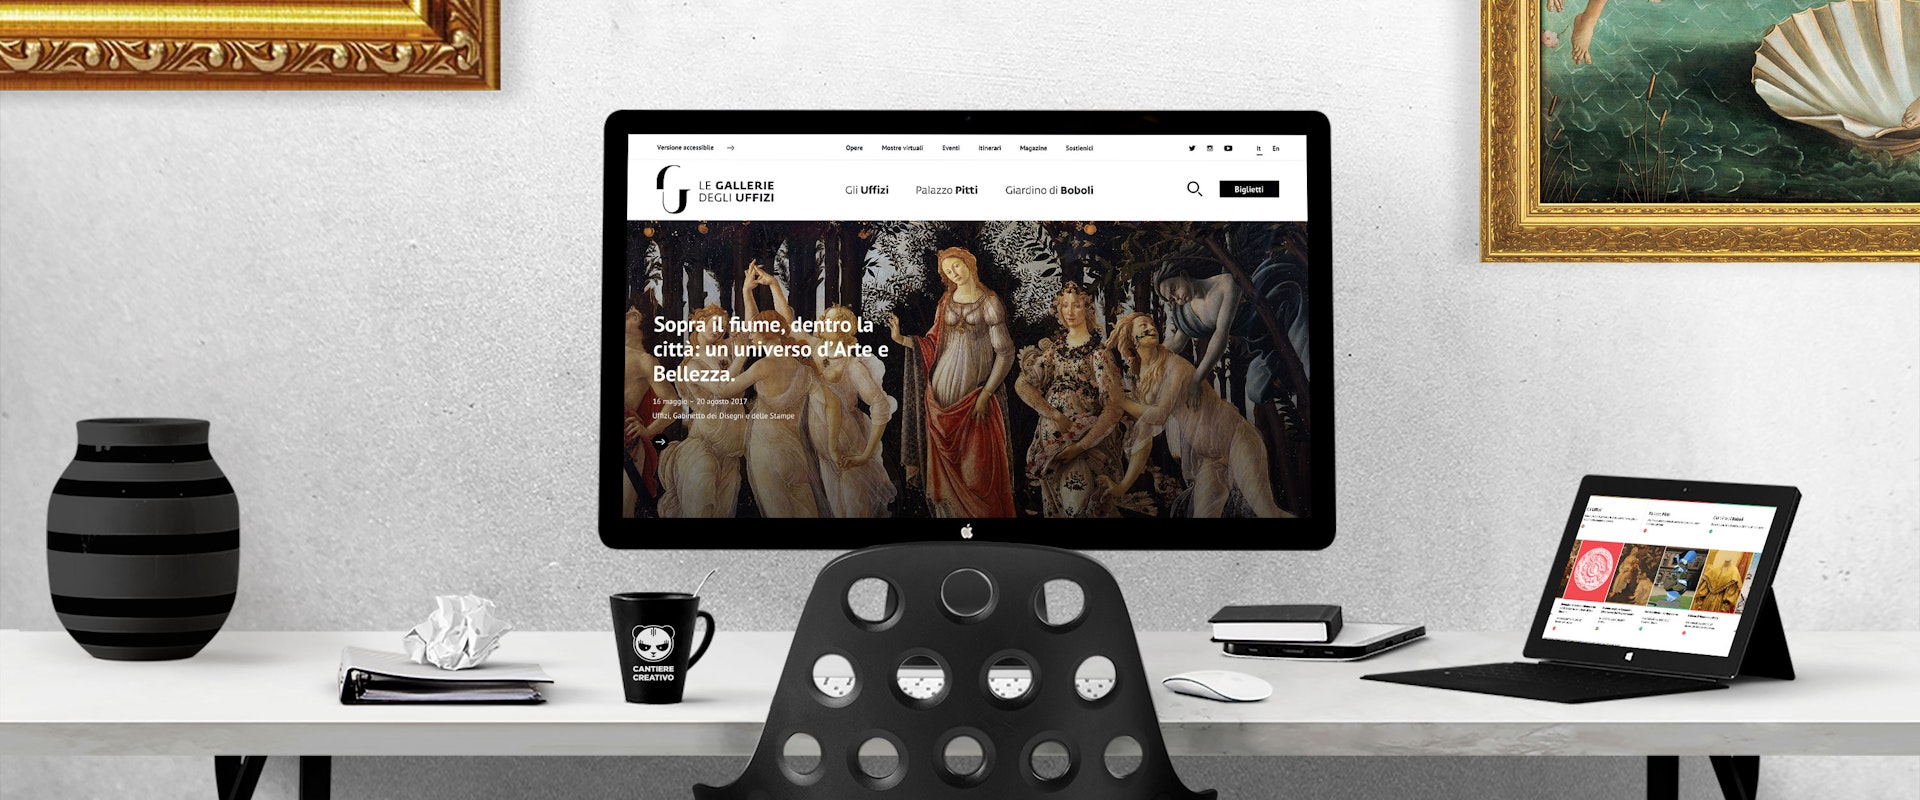 The Uffizi Galleries: a new, user-friendly website